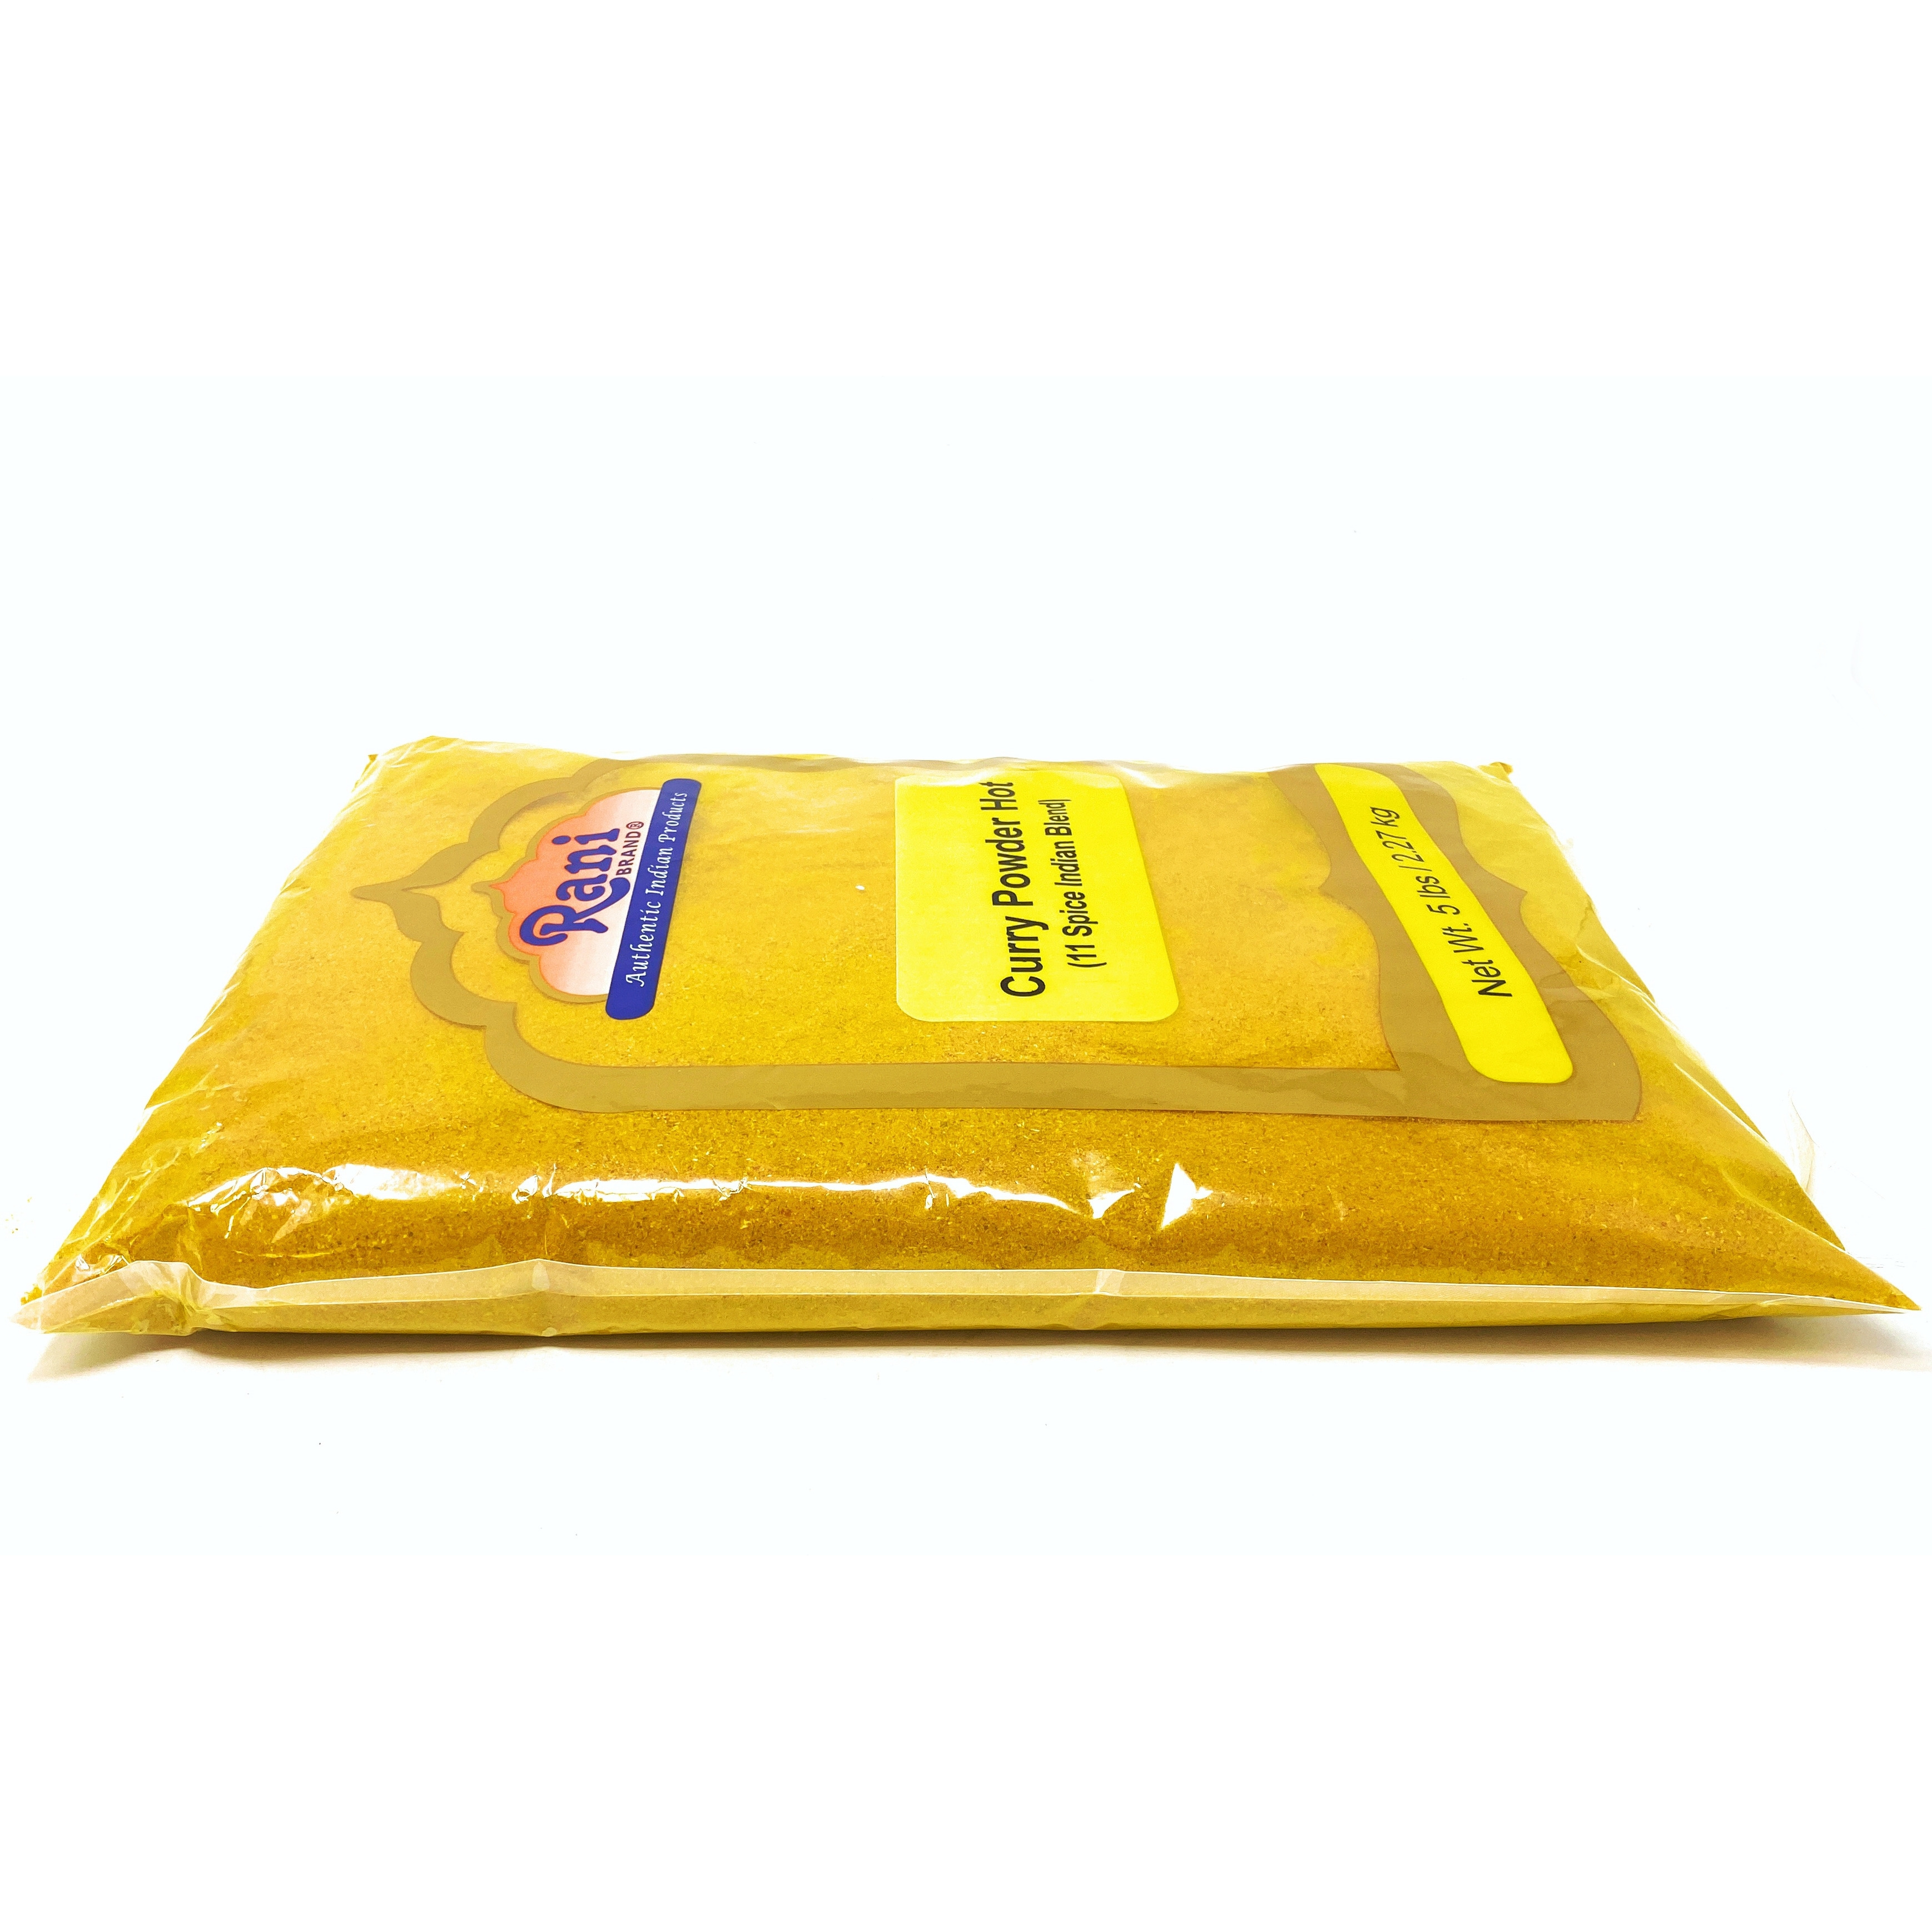 Rani Curry Powder Hot Natural 11-Spice Blend 80oz (5lbs) ~ Salt Free | Vegan | Gluten Friendly | NON-GMO